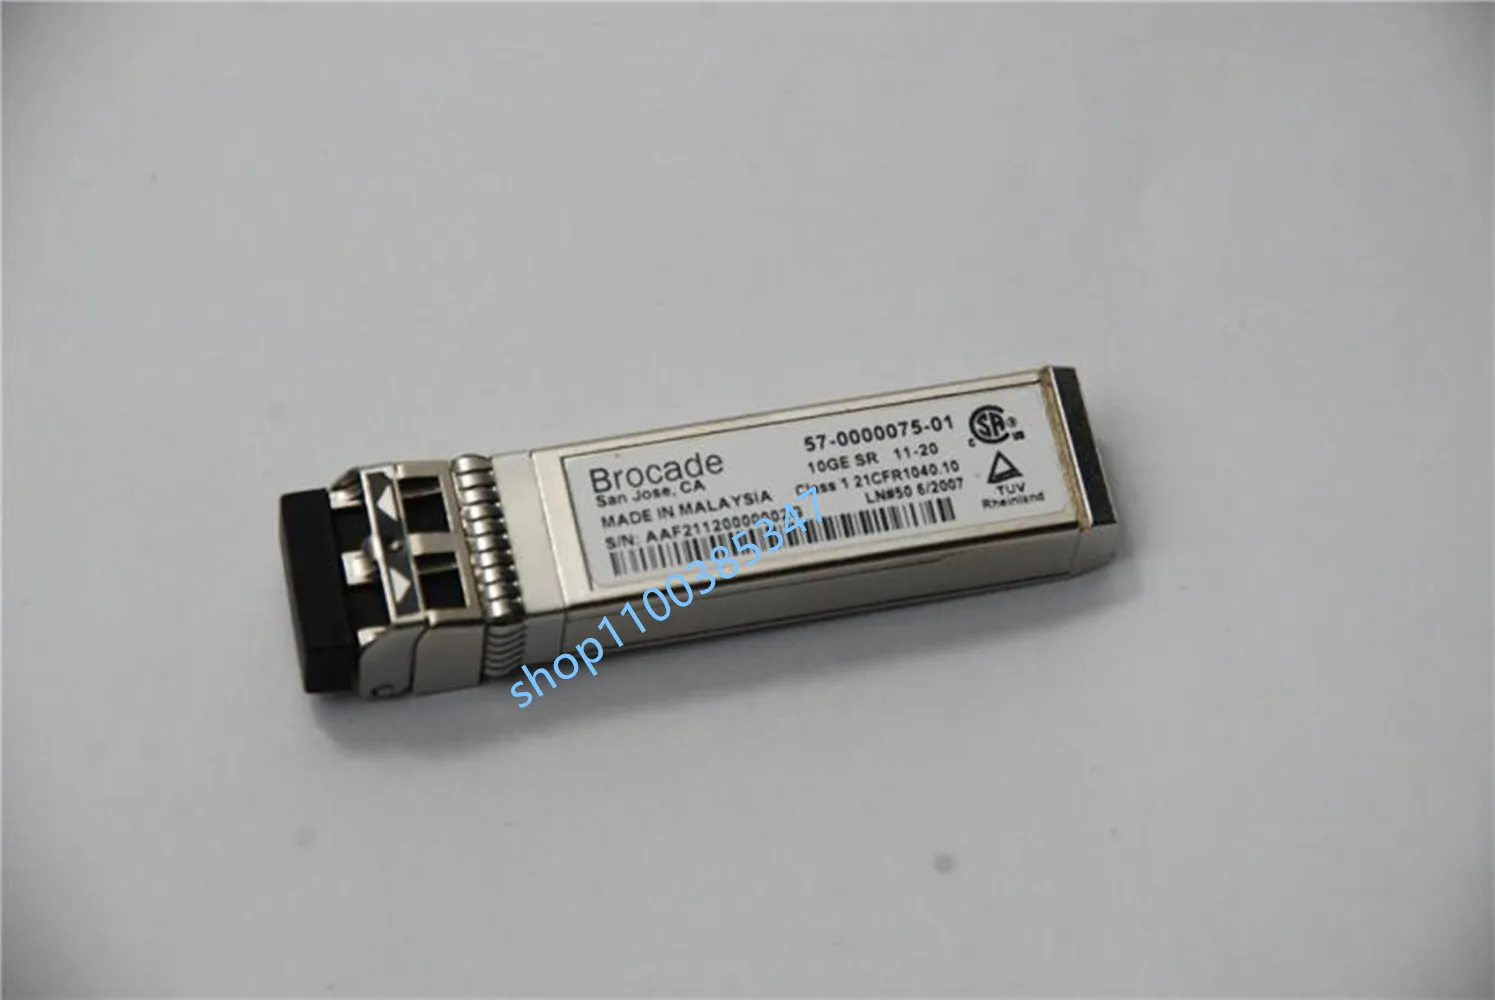 10G fiber SFP/brocade 57-0000075-01/850nm 300M SR/brocade Network adapter Switch Optical fiber module/brocade Switch port module